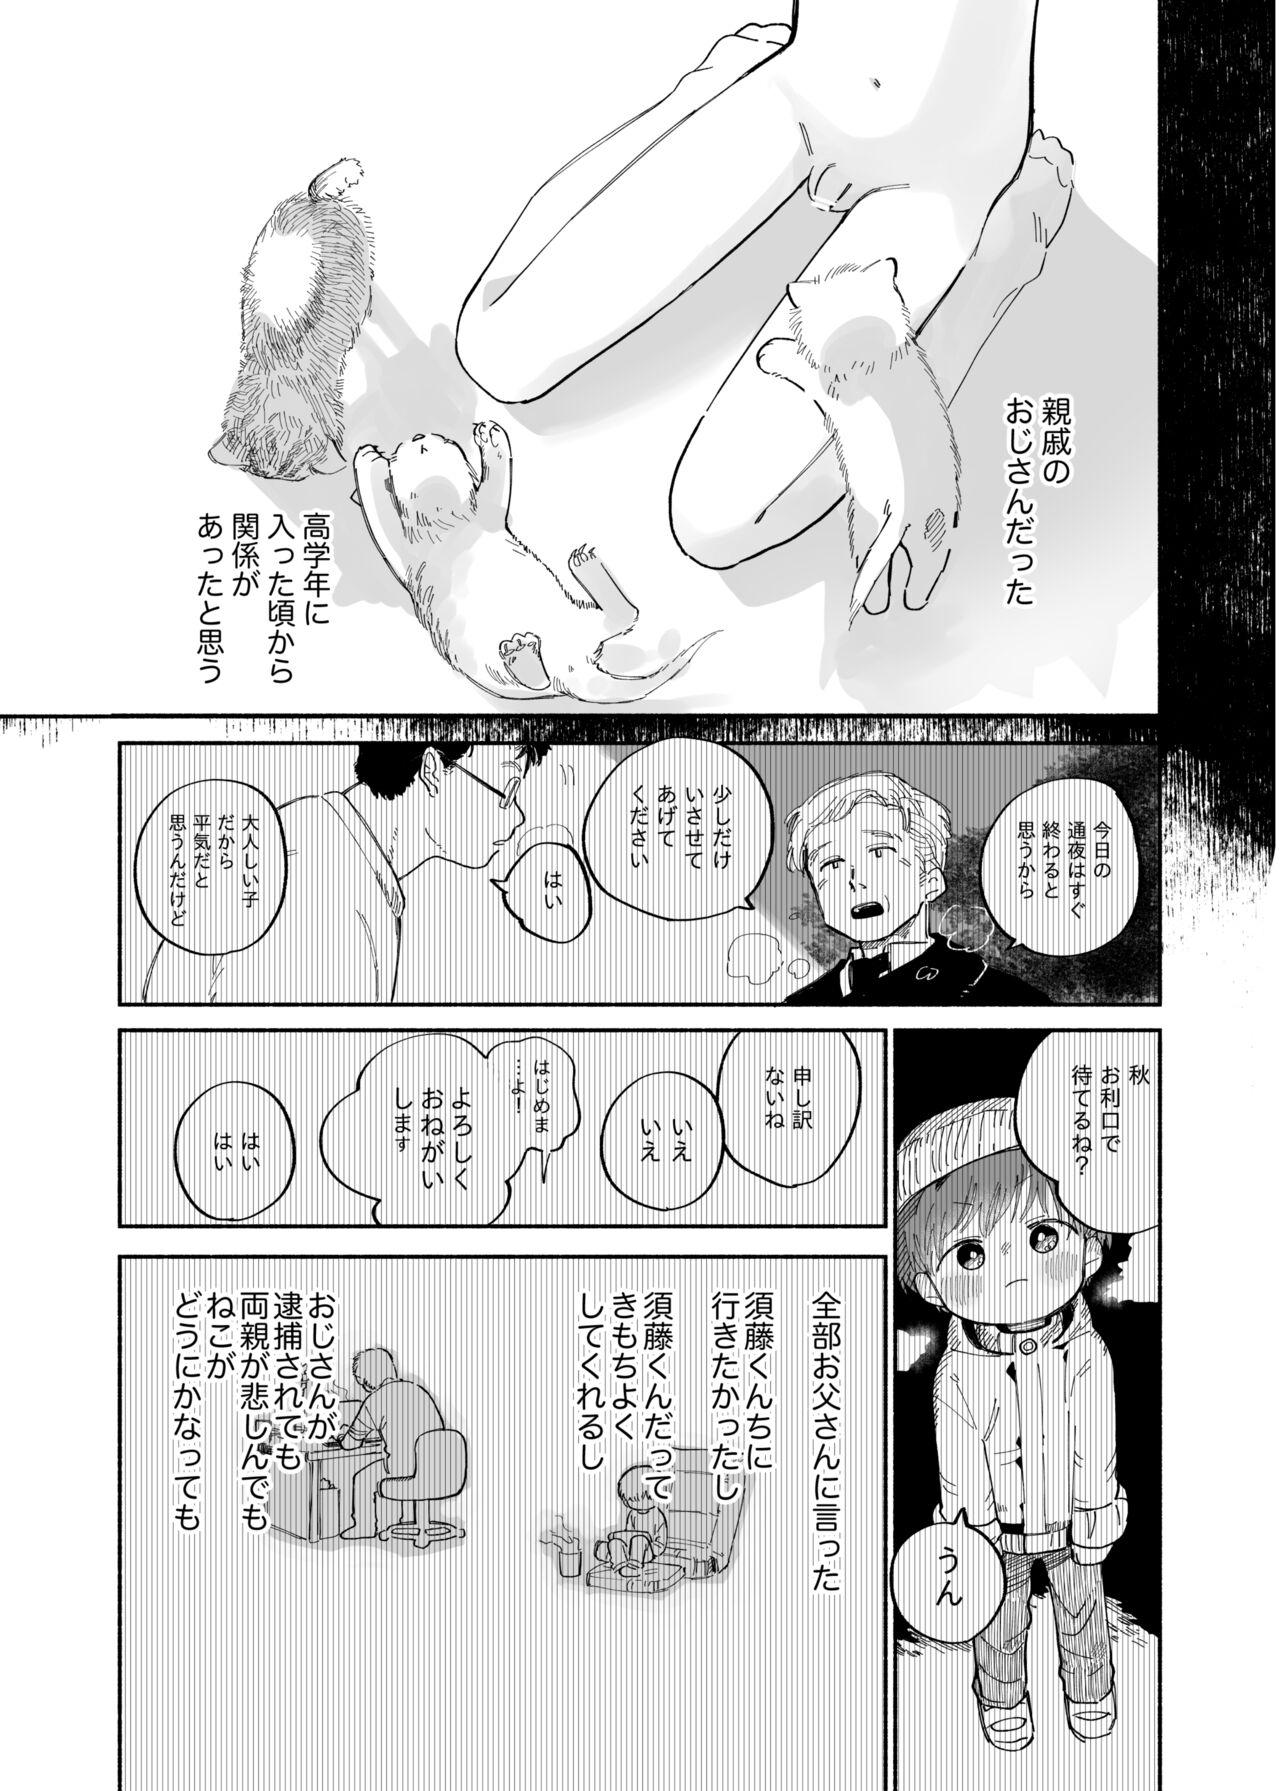 Hardcore Mawashi Gui Cream puff - Original Ink - Page 5